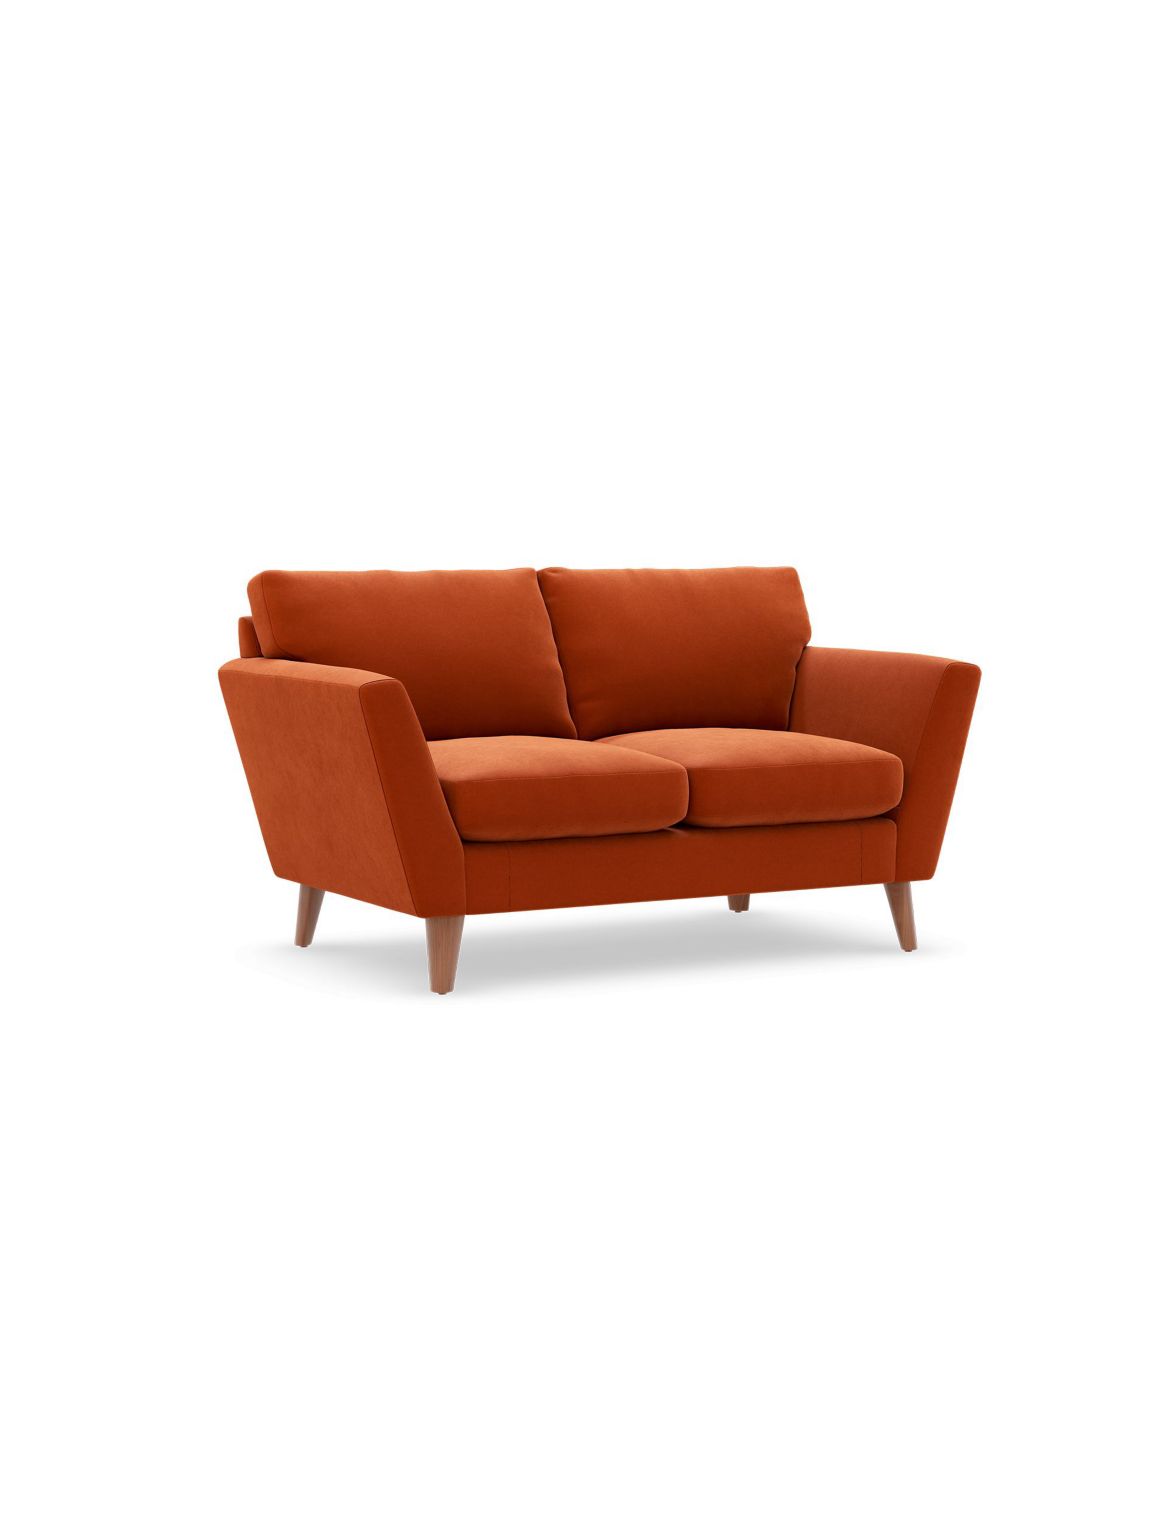 Foxbury Small Sofa orange